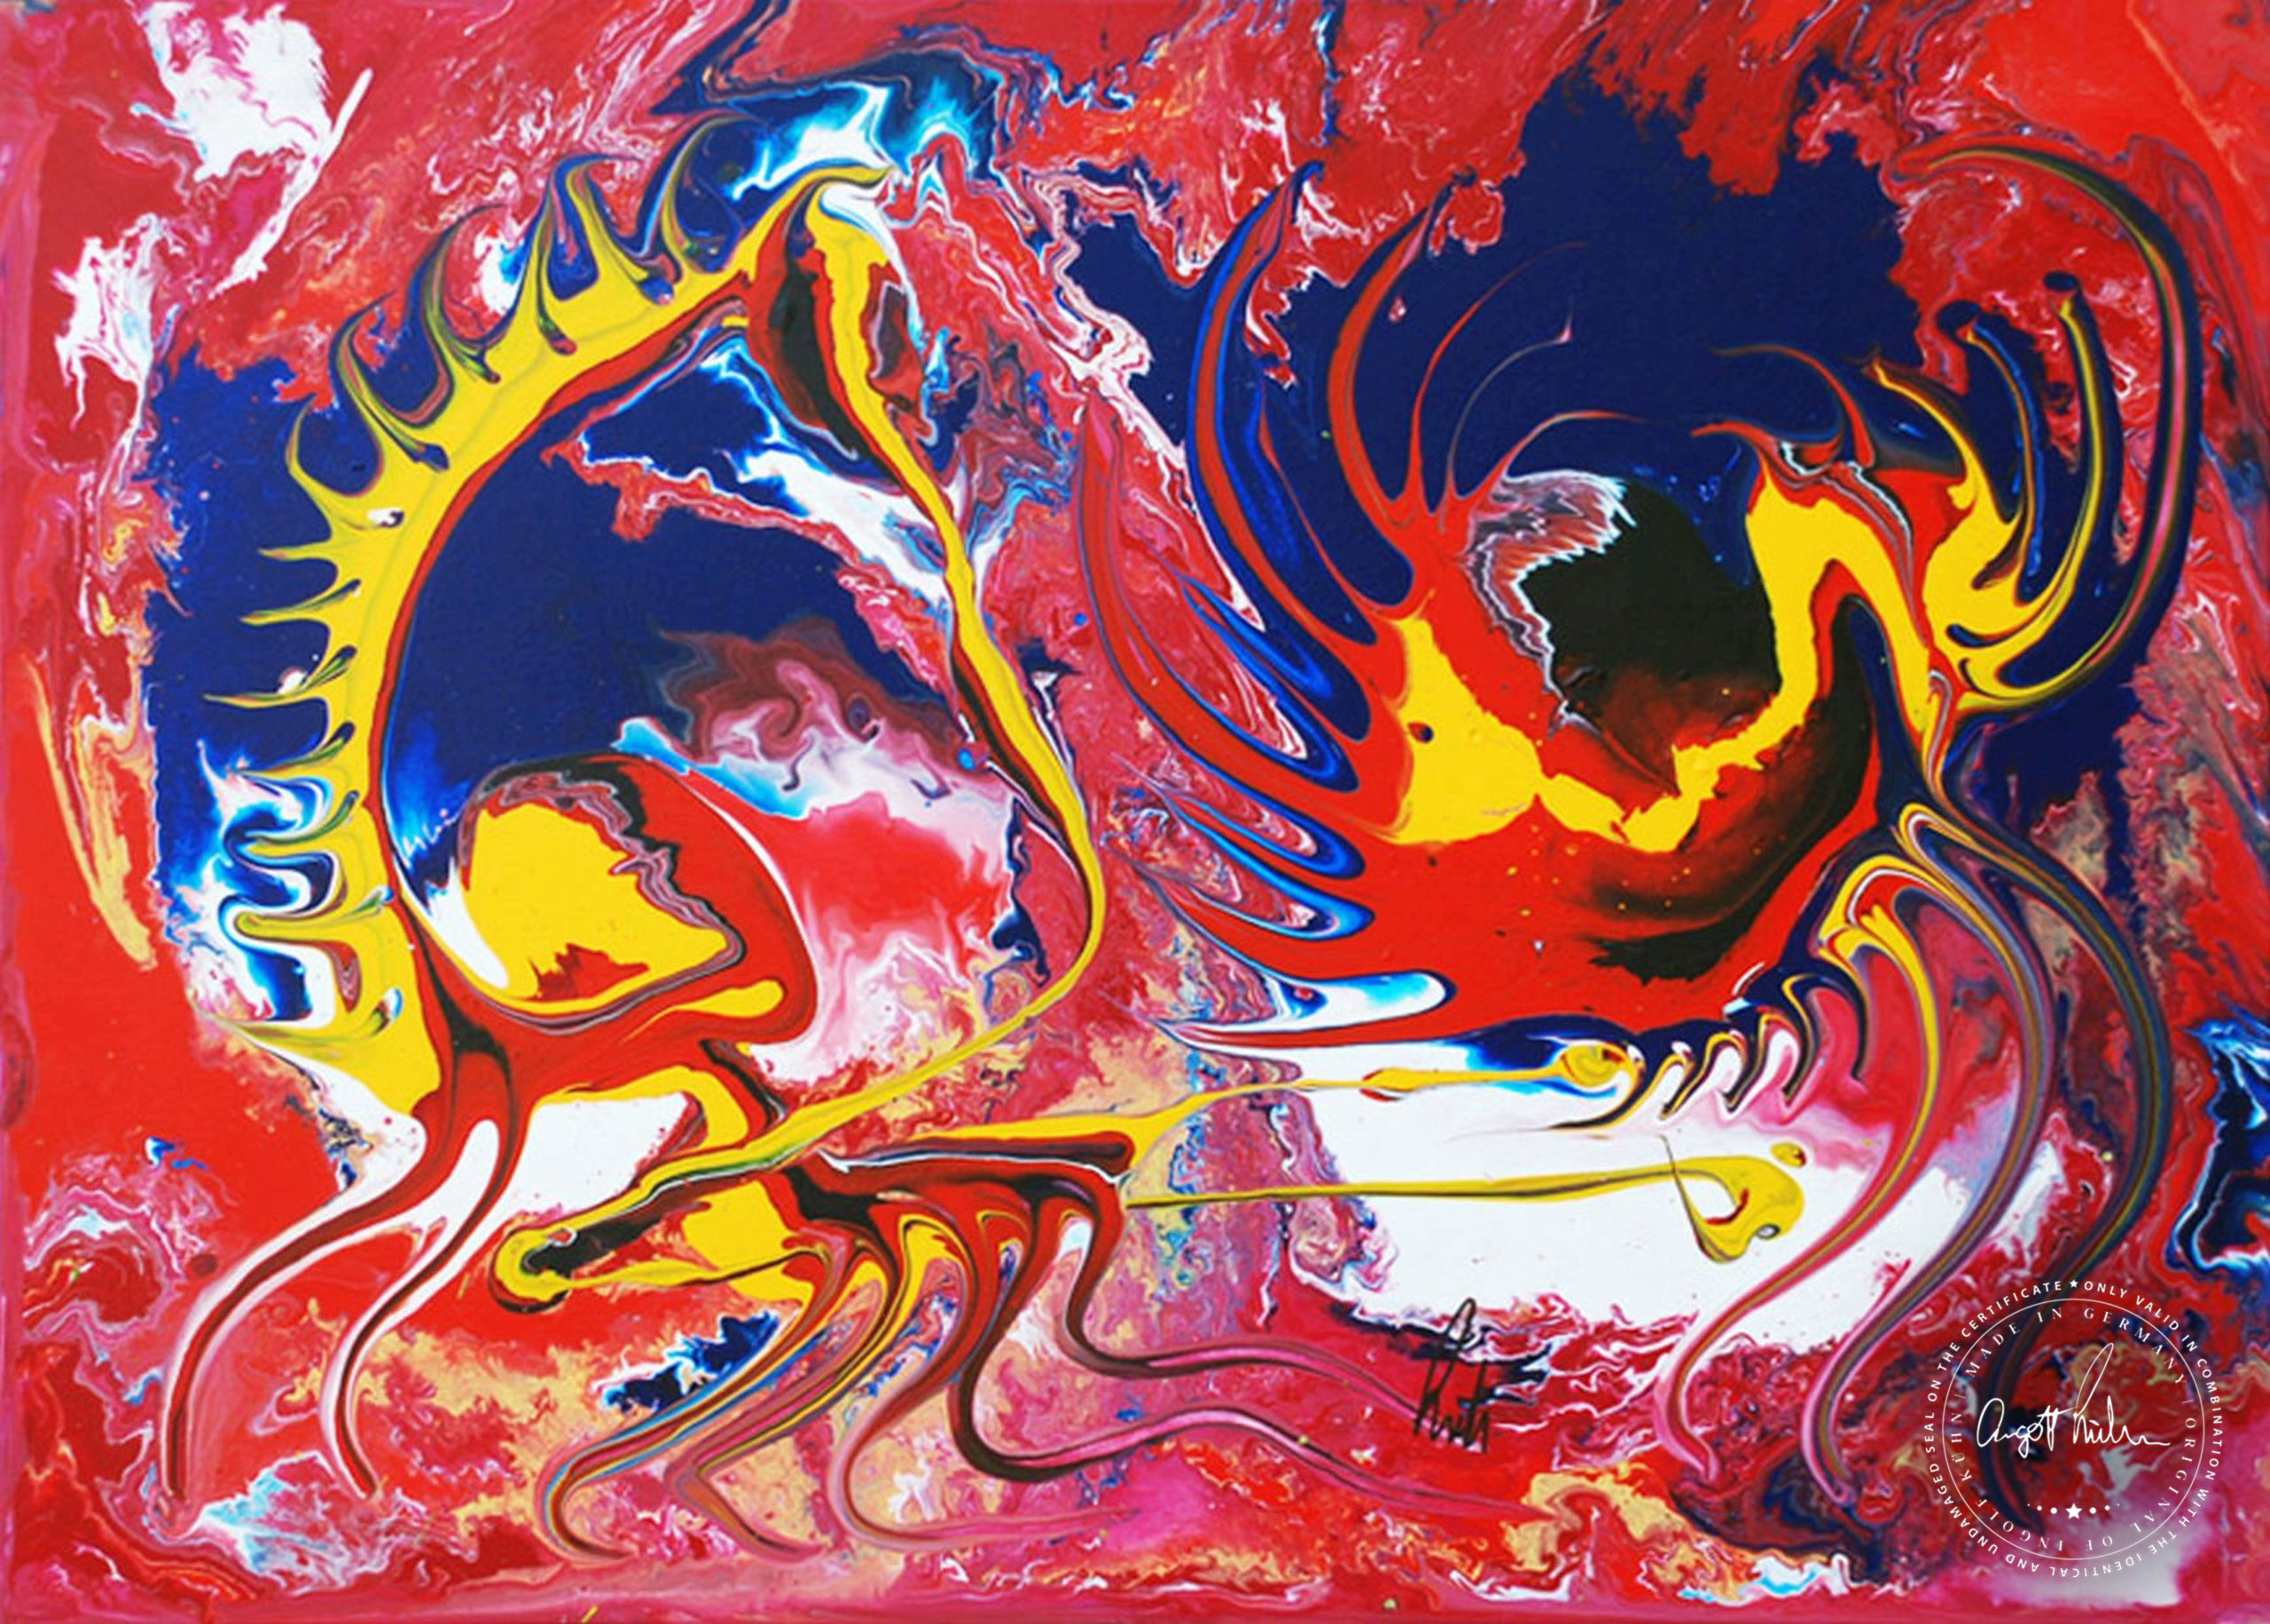 Artwork by Ingolf Kühn Dance of Joy Art-No 11090 acrylic on canvas 100 x 80 2012